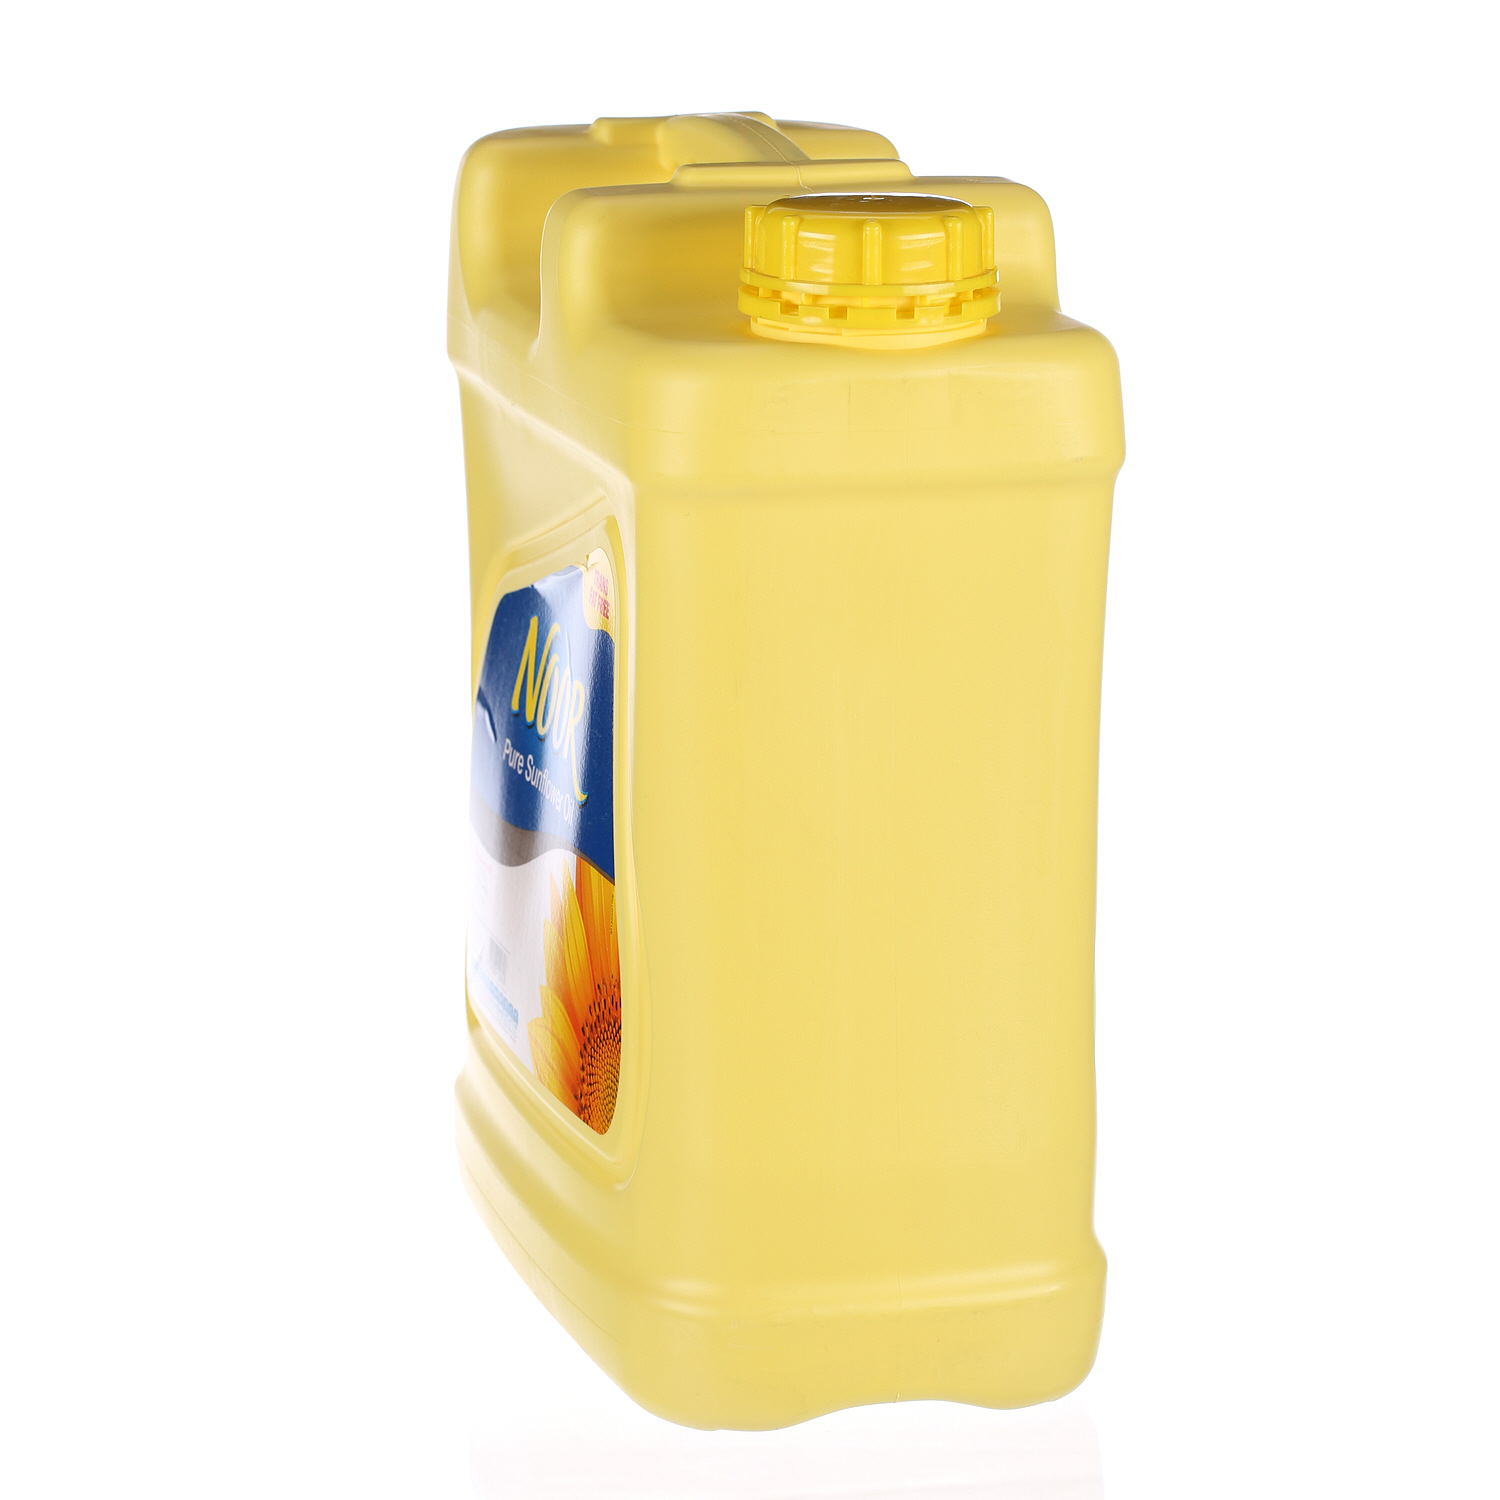 Noor Pure Sunflower Oil 9Ltr